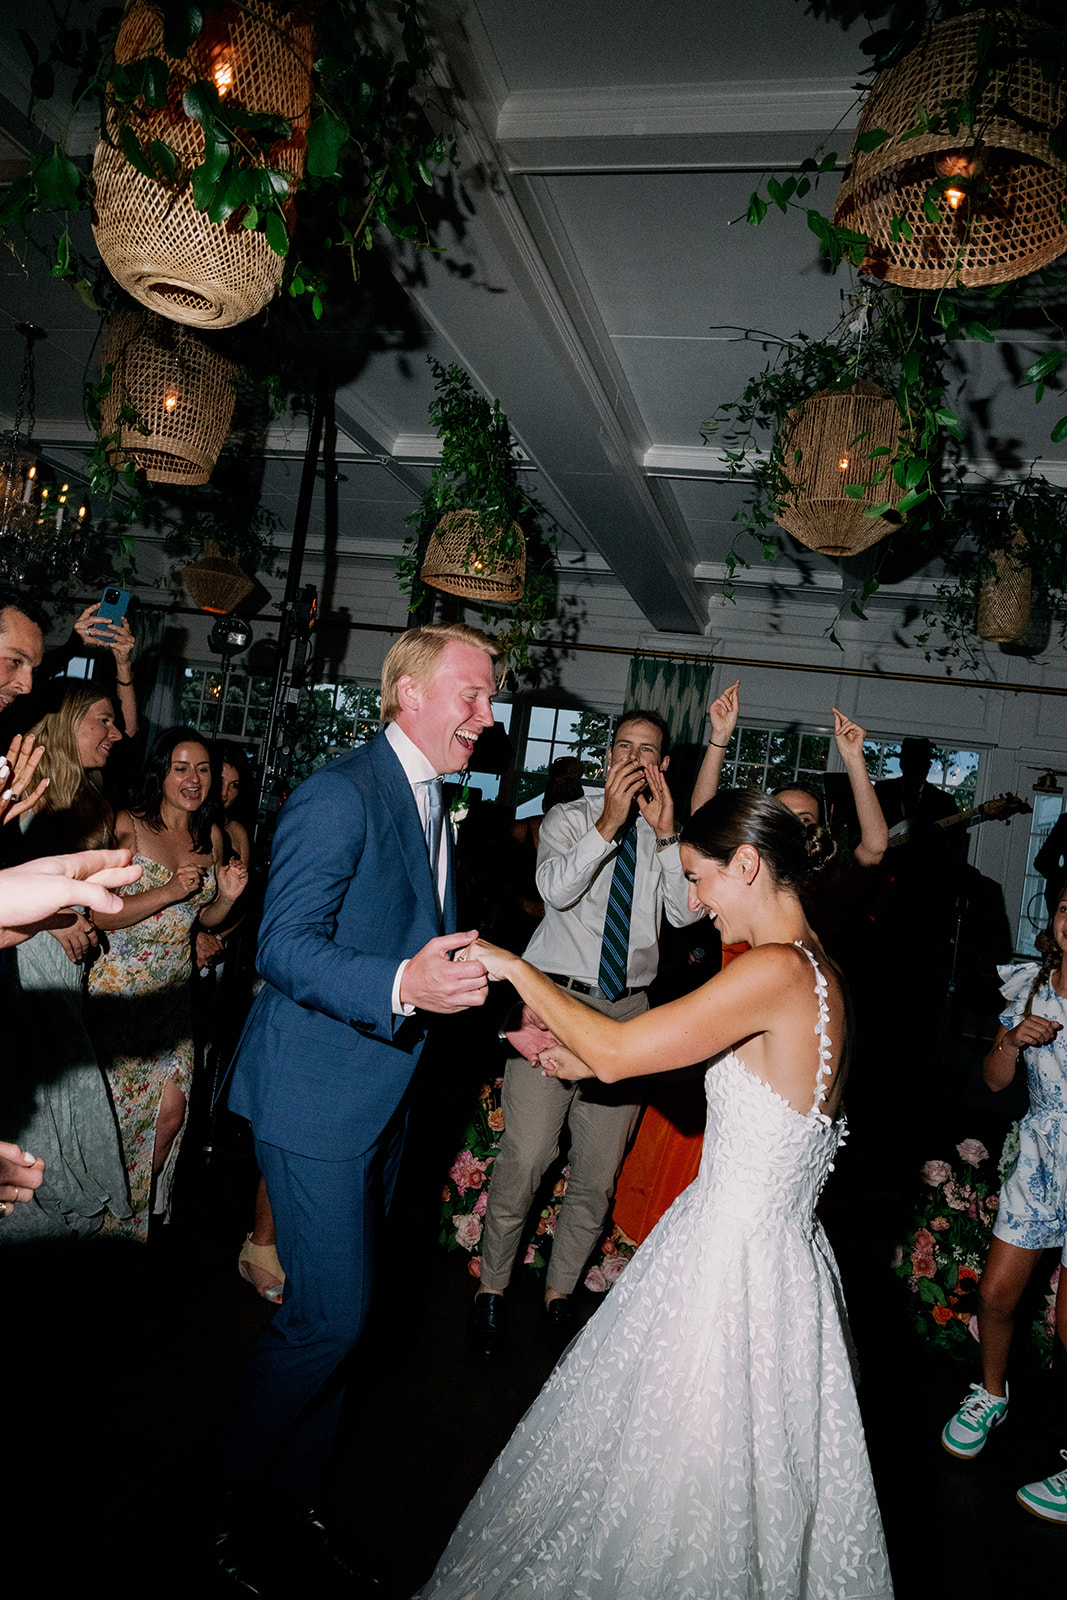 Bride and groom dancing at their wedding reception at Minikahda Club.